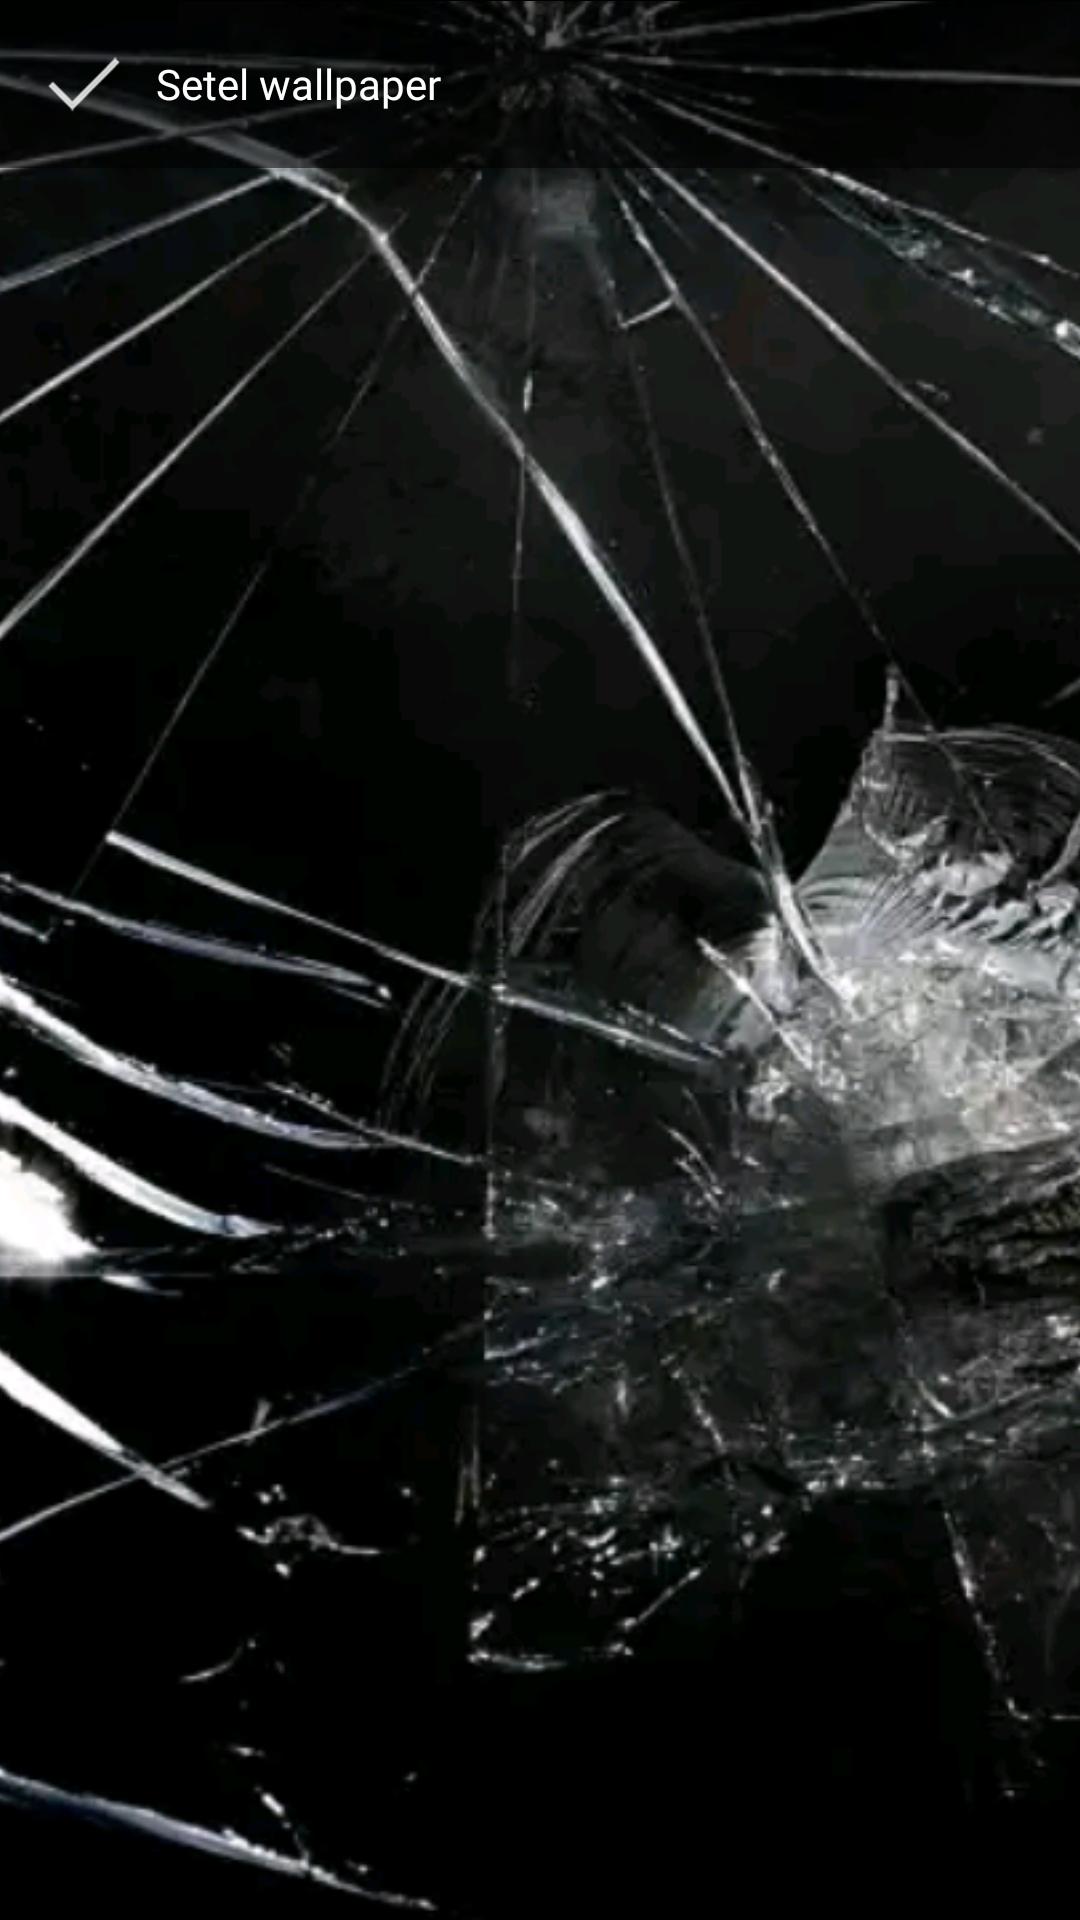 Вид разбитый. Разбитое стекло. Треснутое стекло. Разбитый монитор. Экран разбитого стекла.